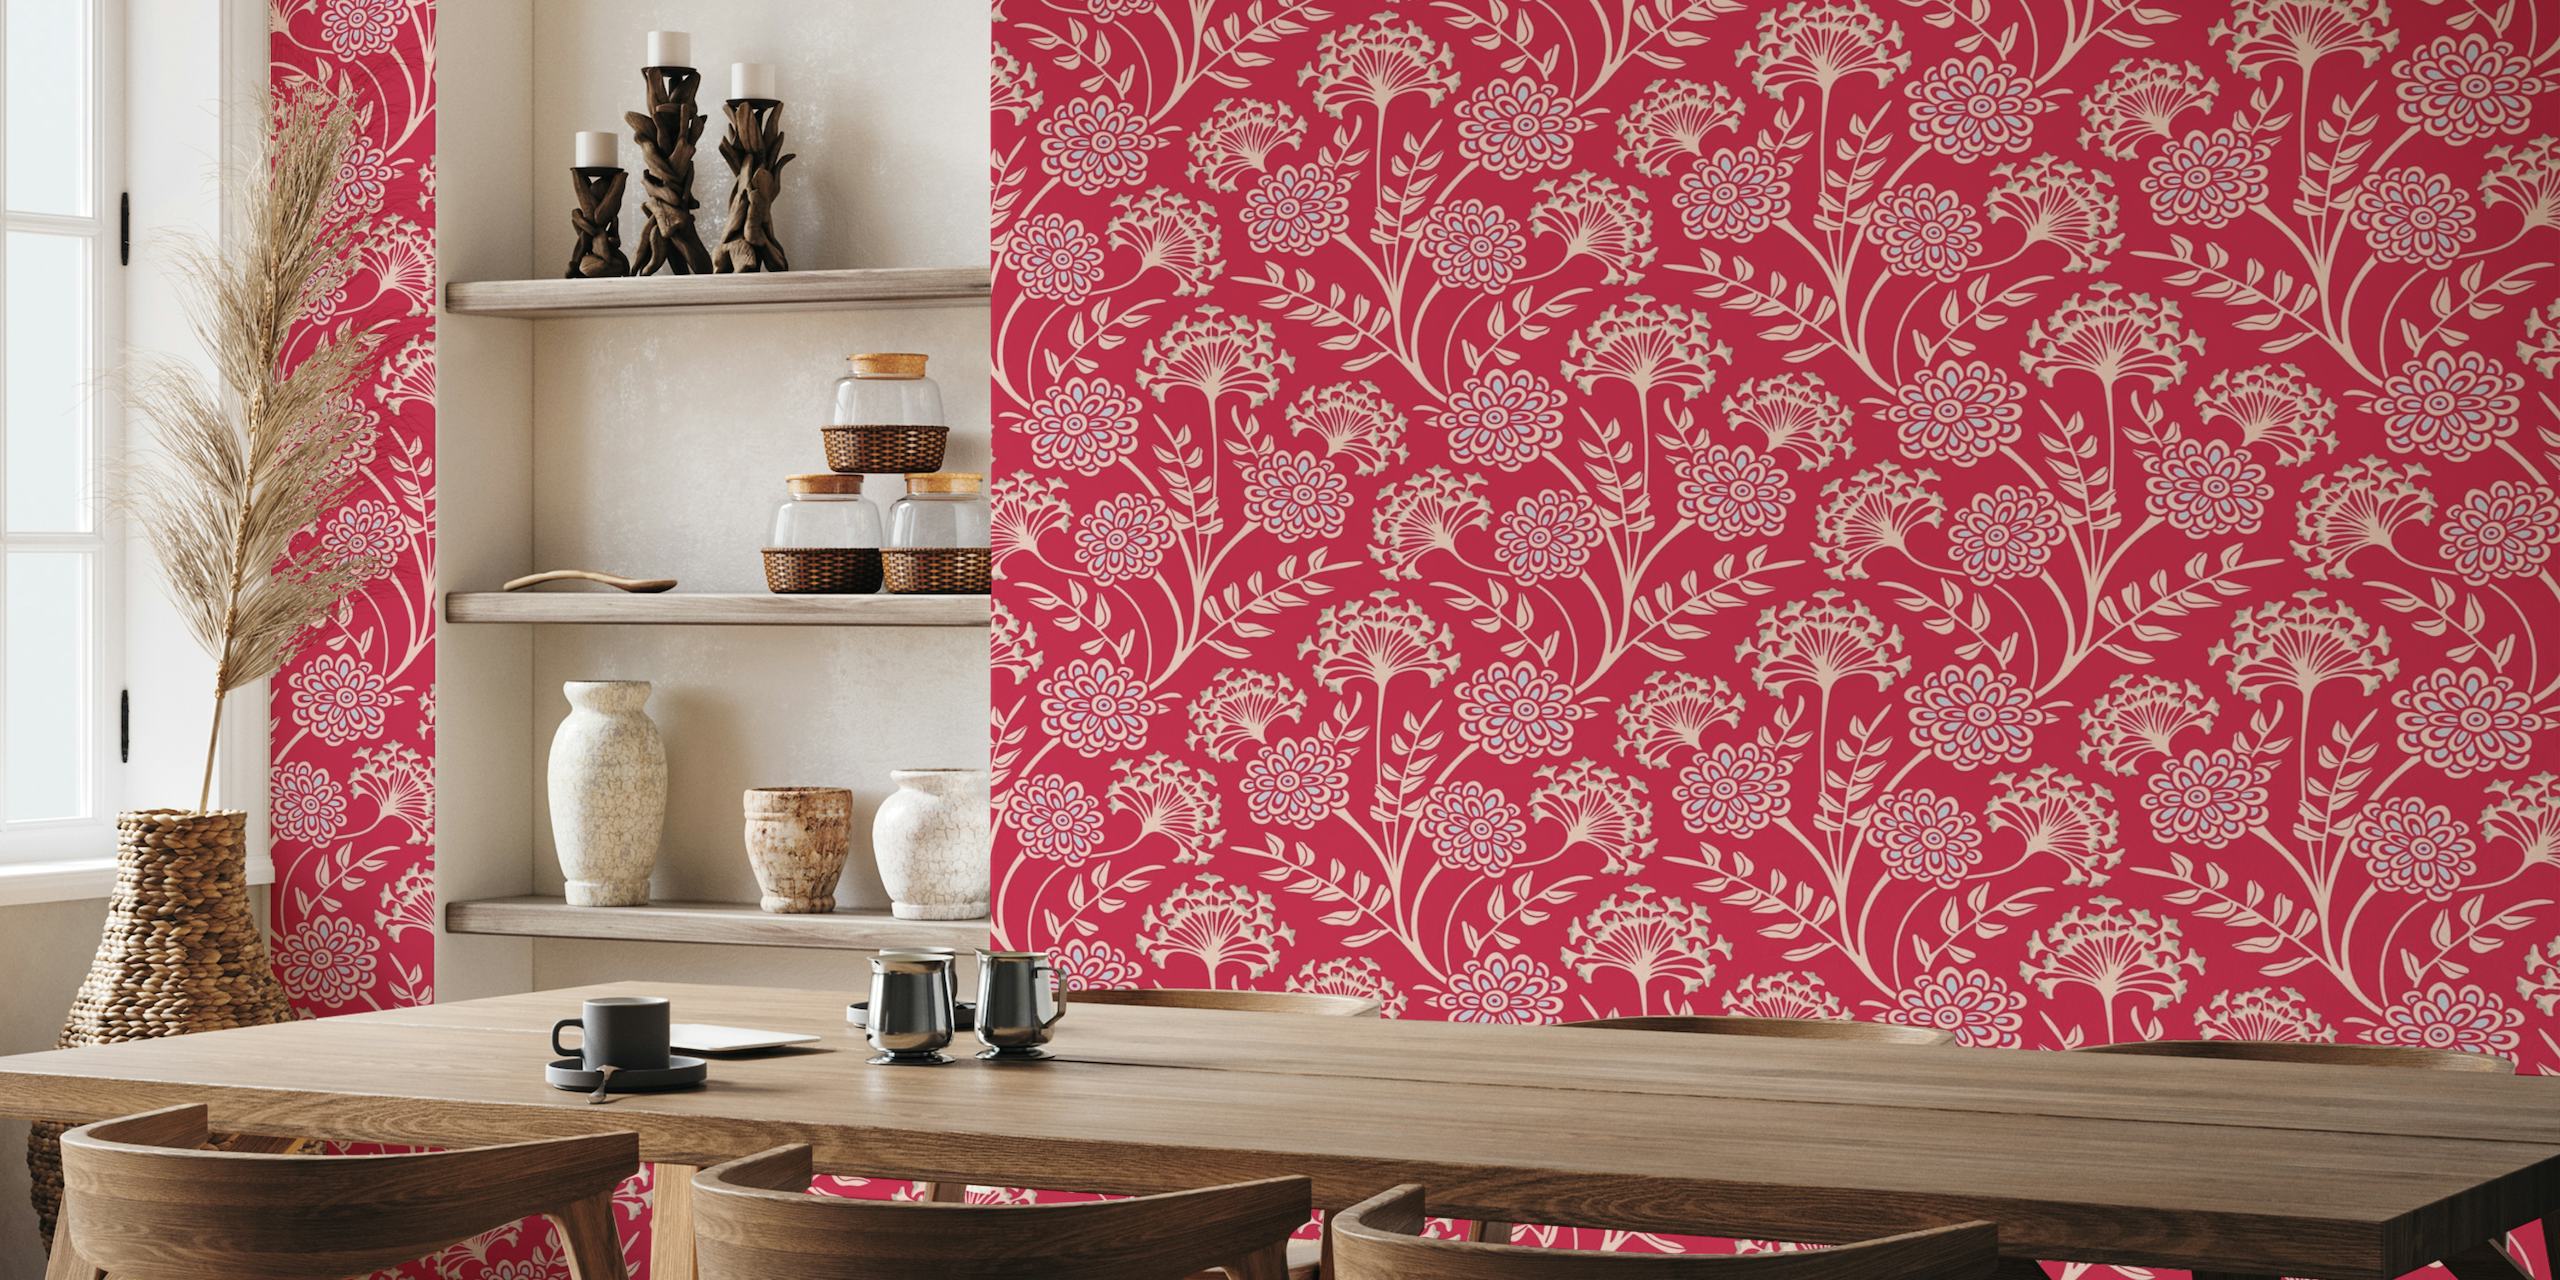 DANUBE Cottage Floral - Magenta Red - Large papiers peint